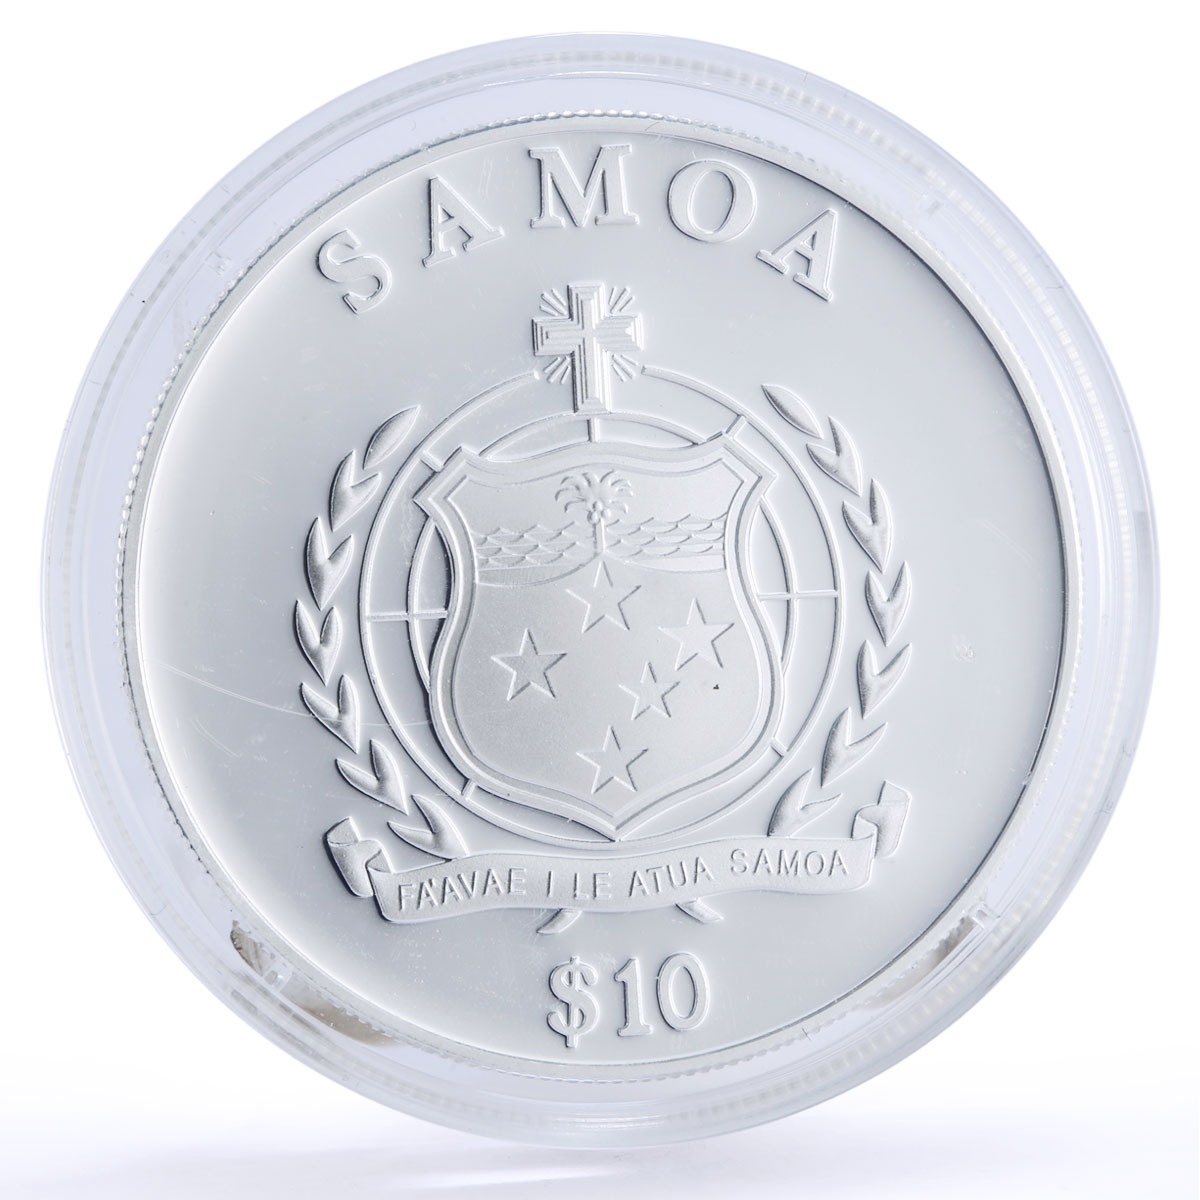 Samoa 10 dollars 3rd Commandment Remember the Sabbath gilded silver coin 2009